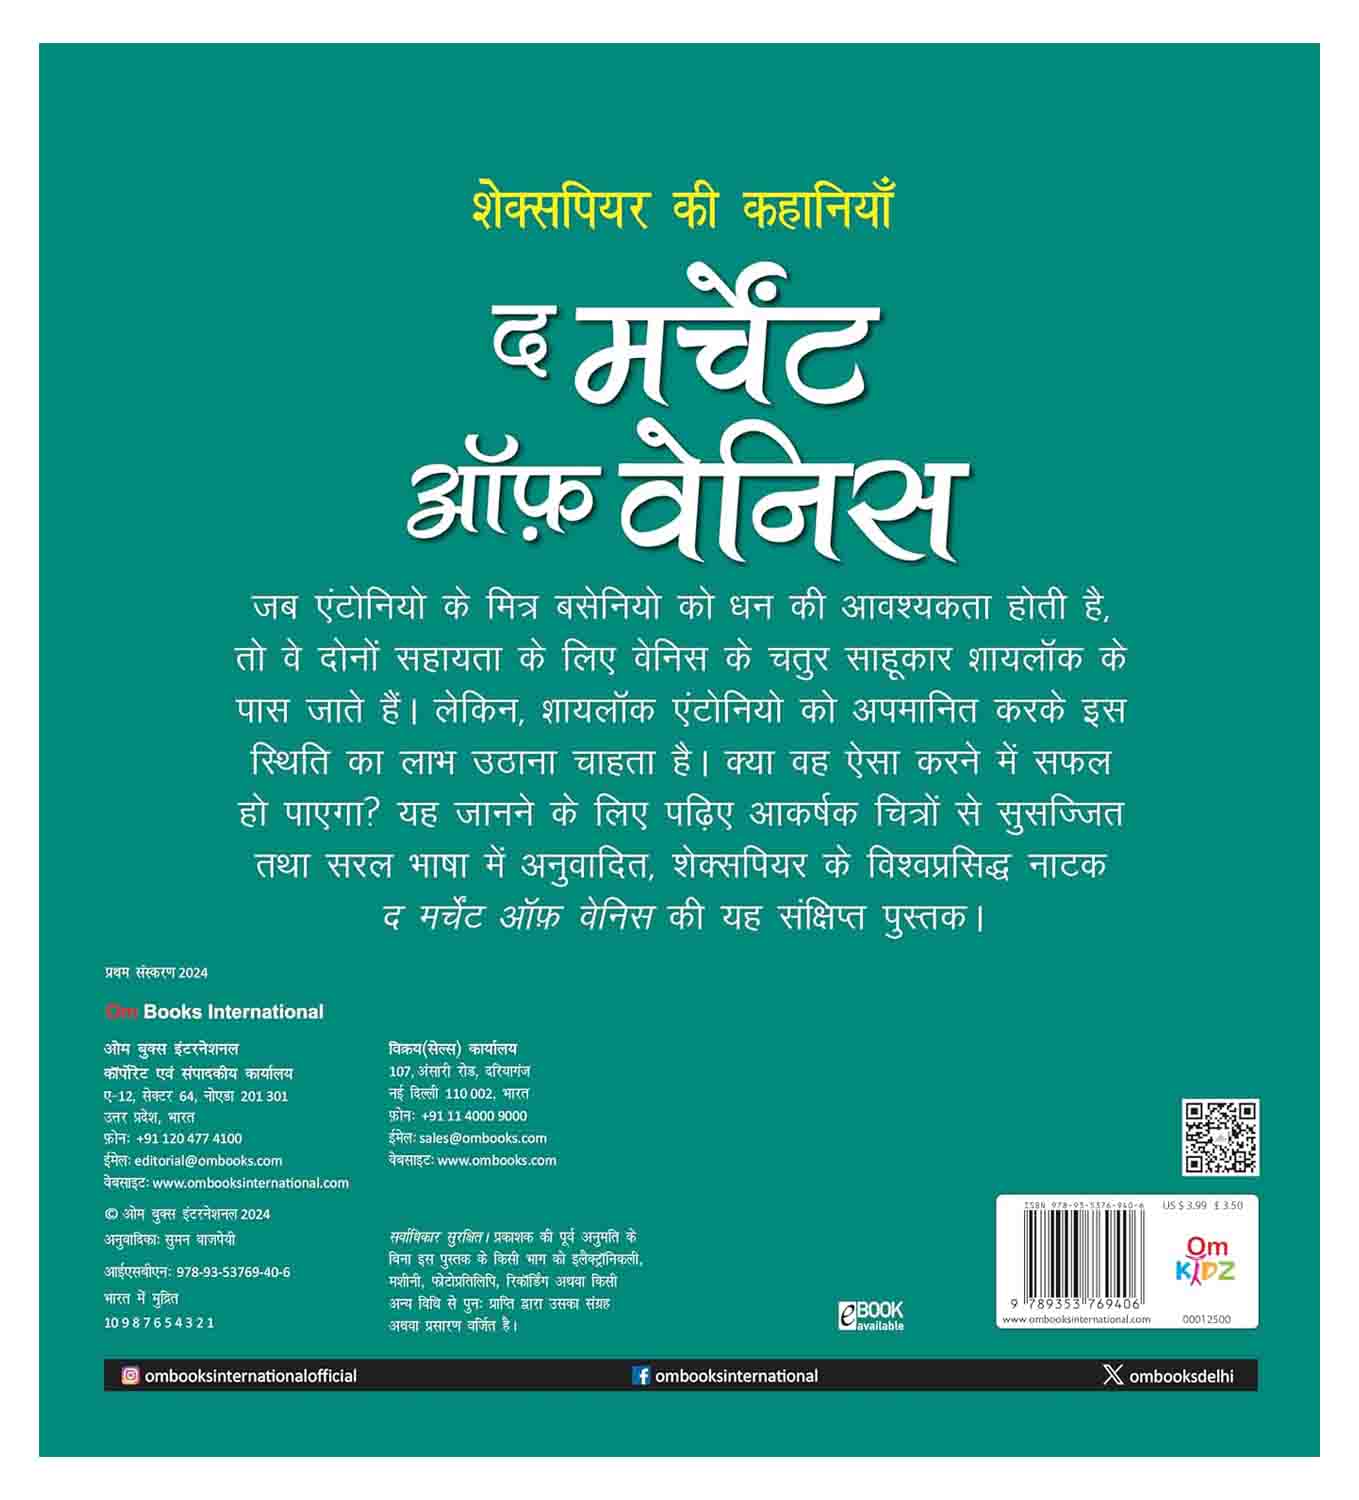 Om Books International The Merchant of Venice- Shakespeare ki Kahaniyan in Hindi - 9789353769406